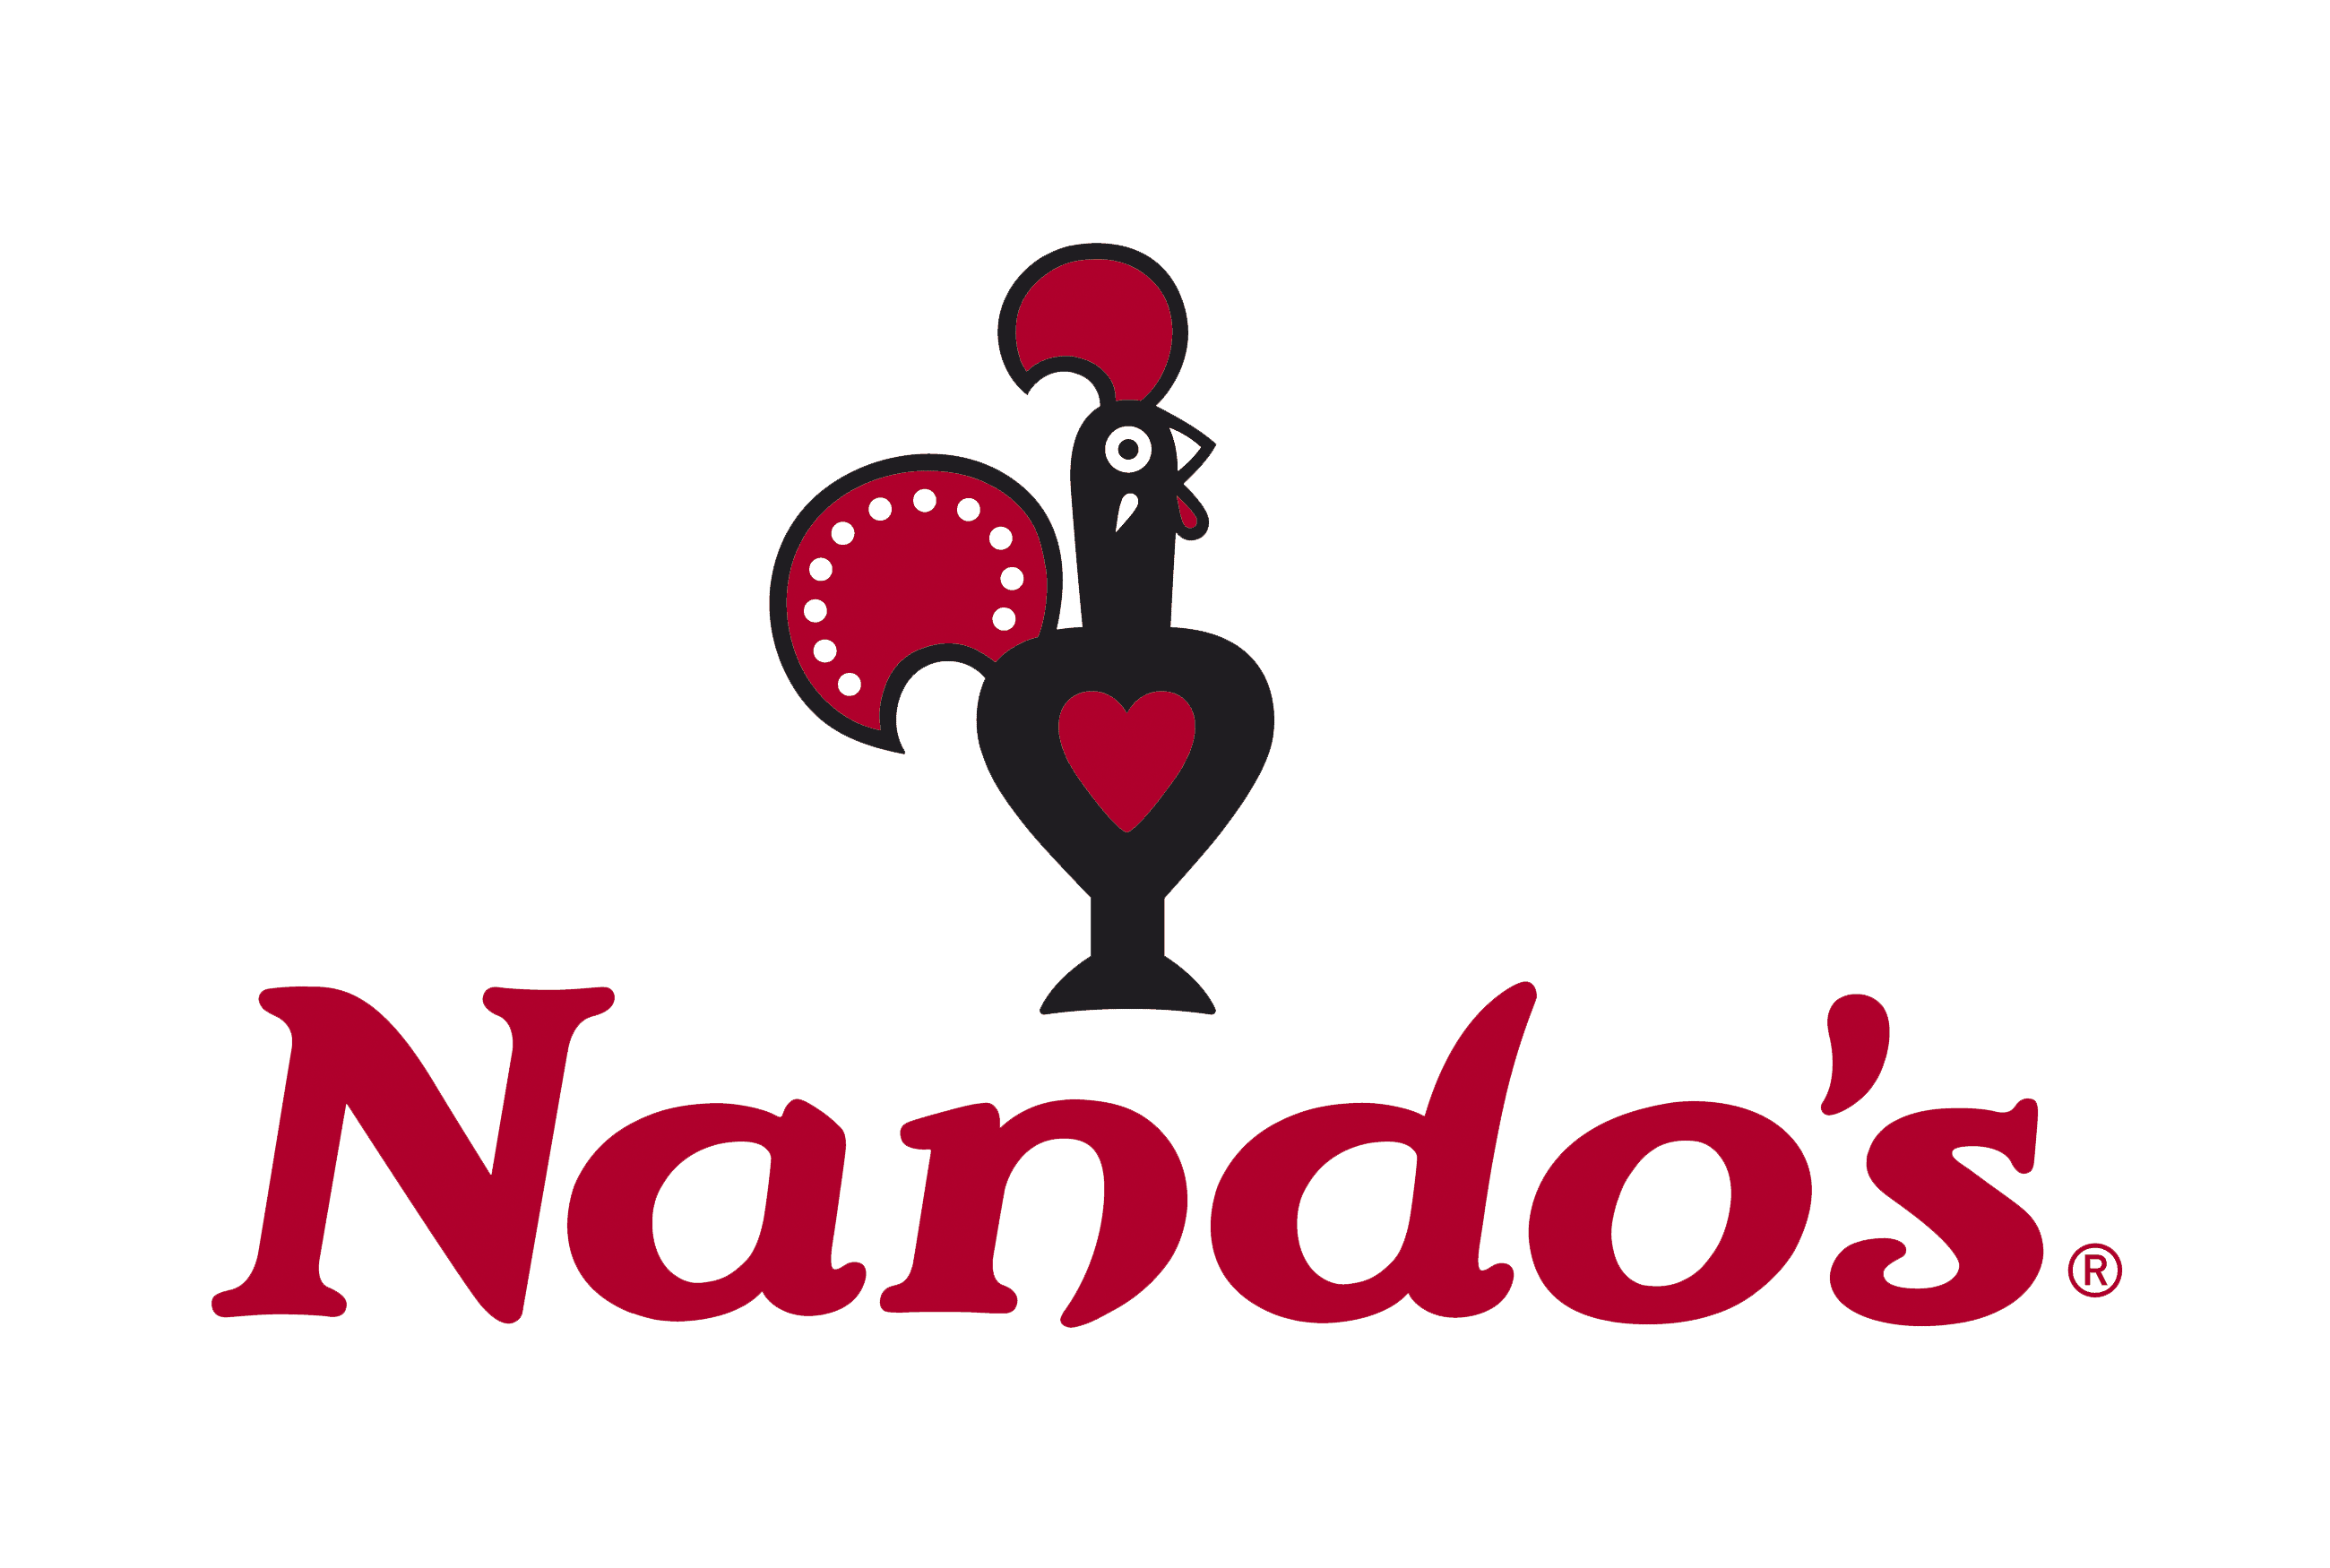 DATA WAREHOUSE DEVELOPER (IT) POSITION AT NANDOS